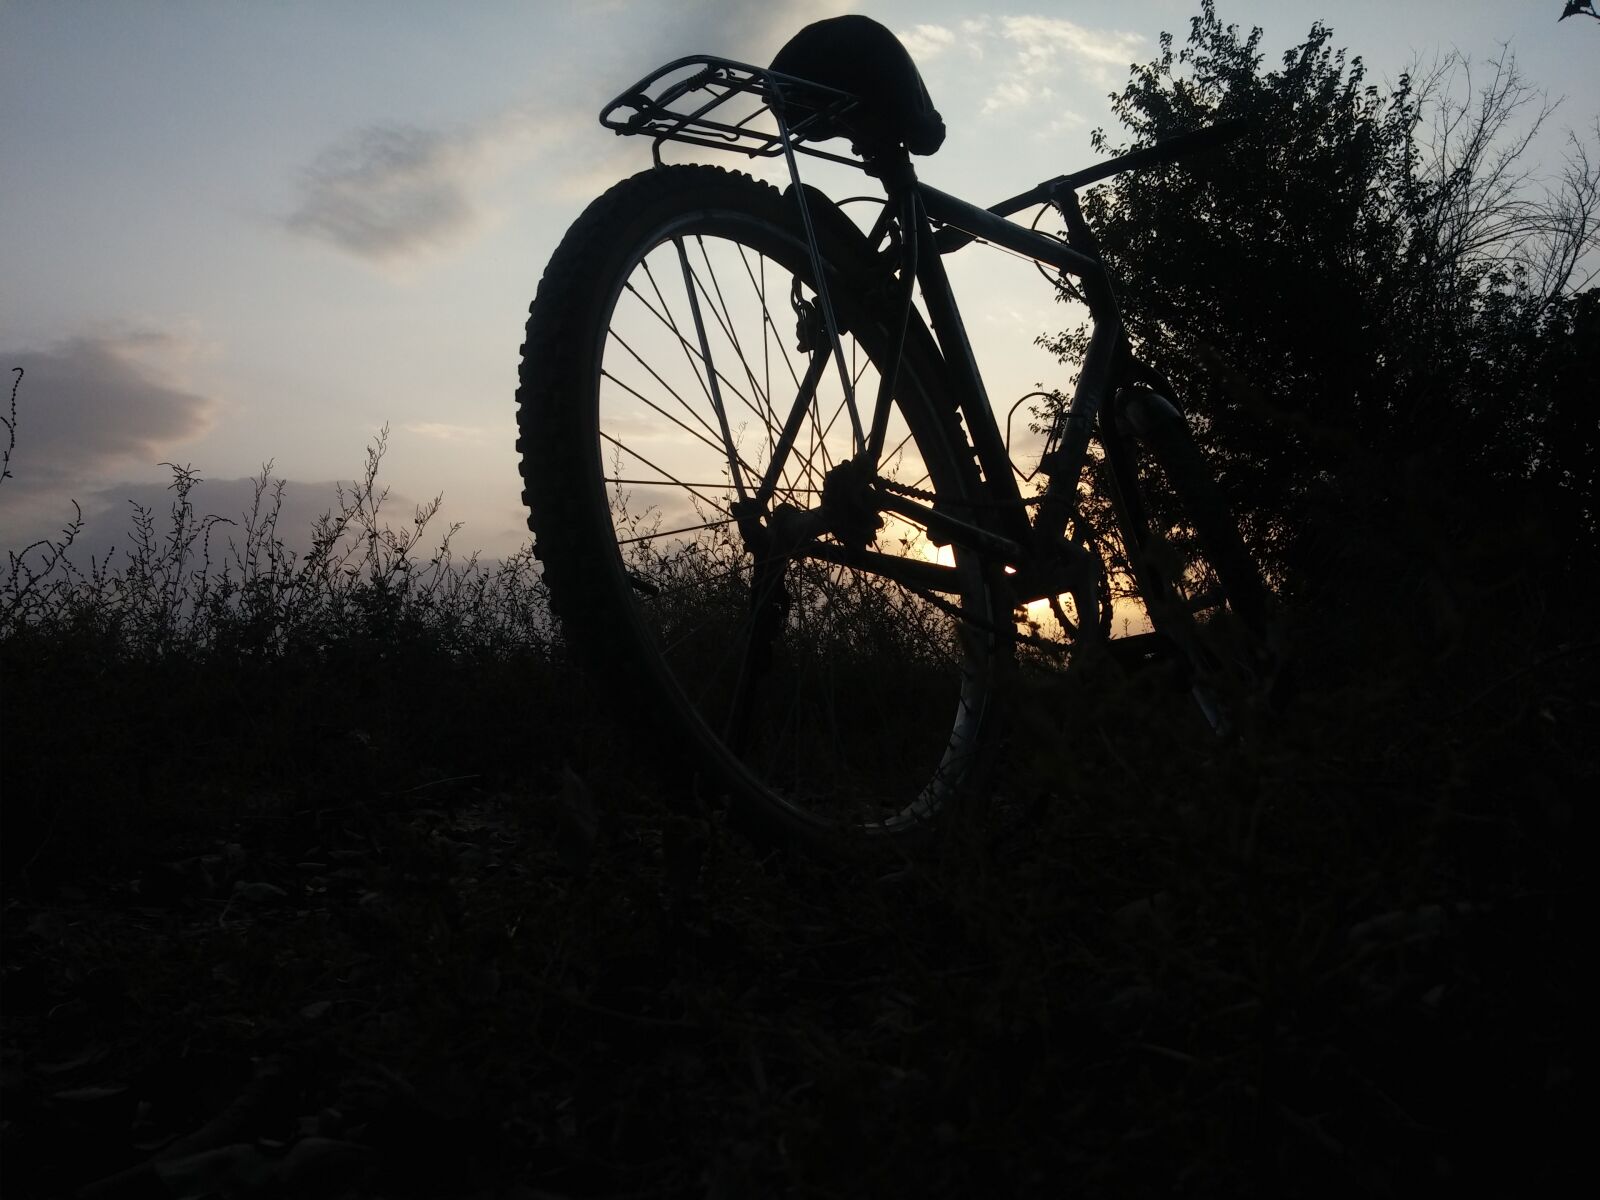 LG G2 sample photo. Bike, farm, sunset, tree photography